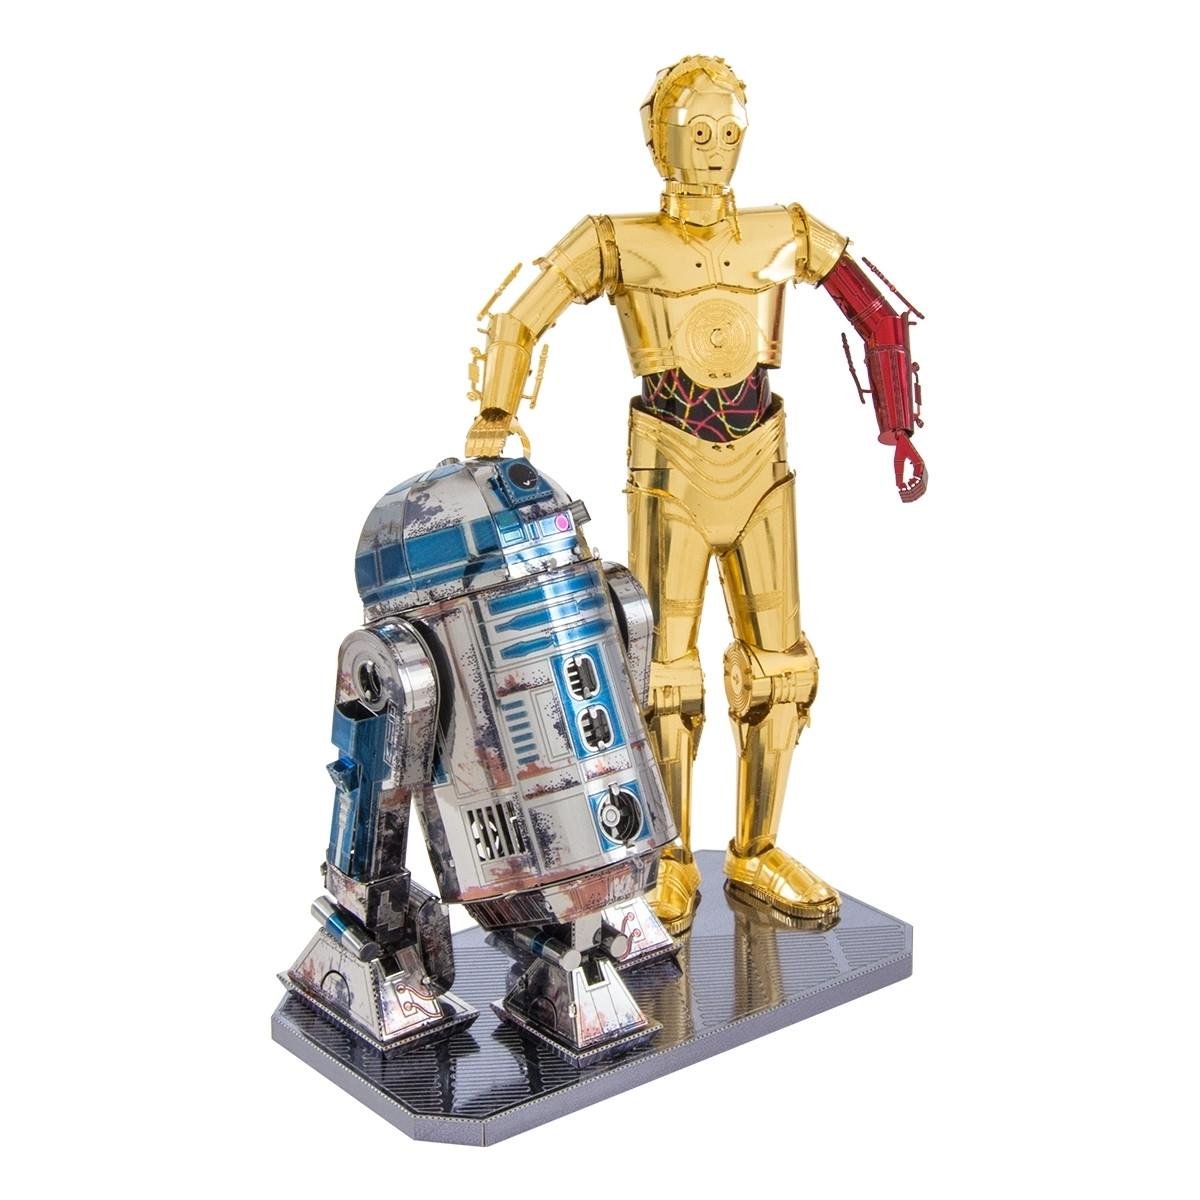 Конструктор металлический Metal Earth Star Wars-C-3PO & R2-D2 Deluxe MMG276 3D